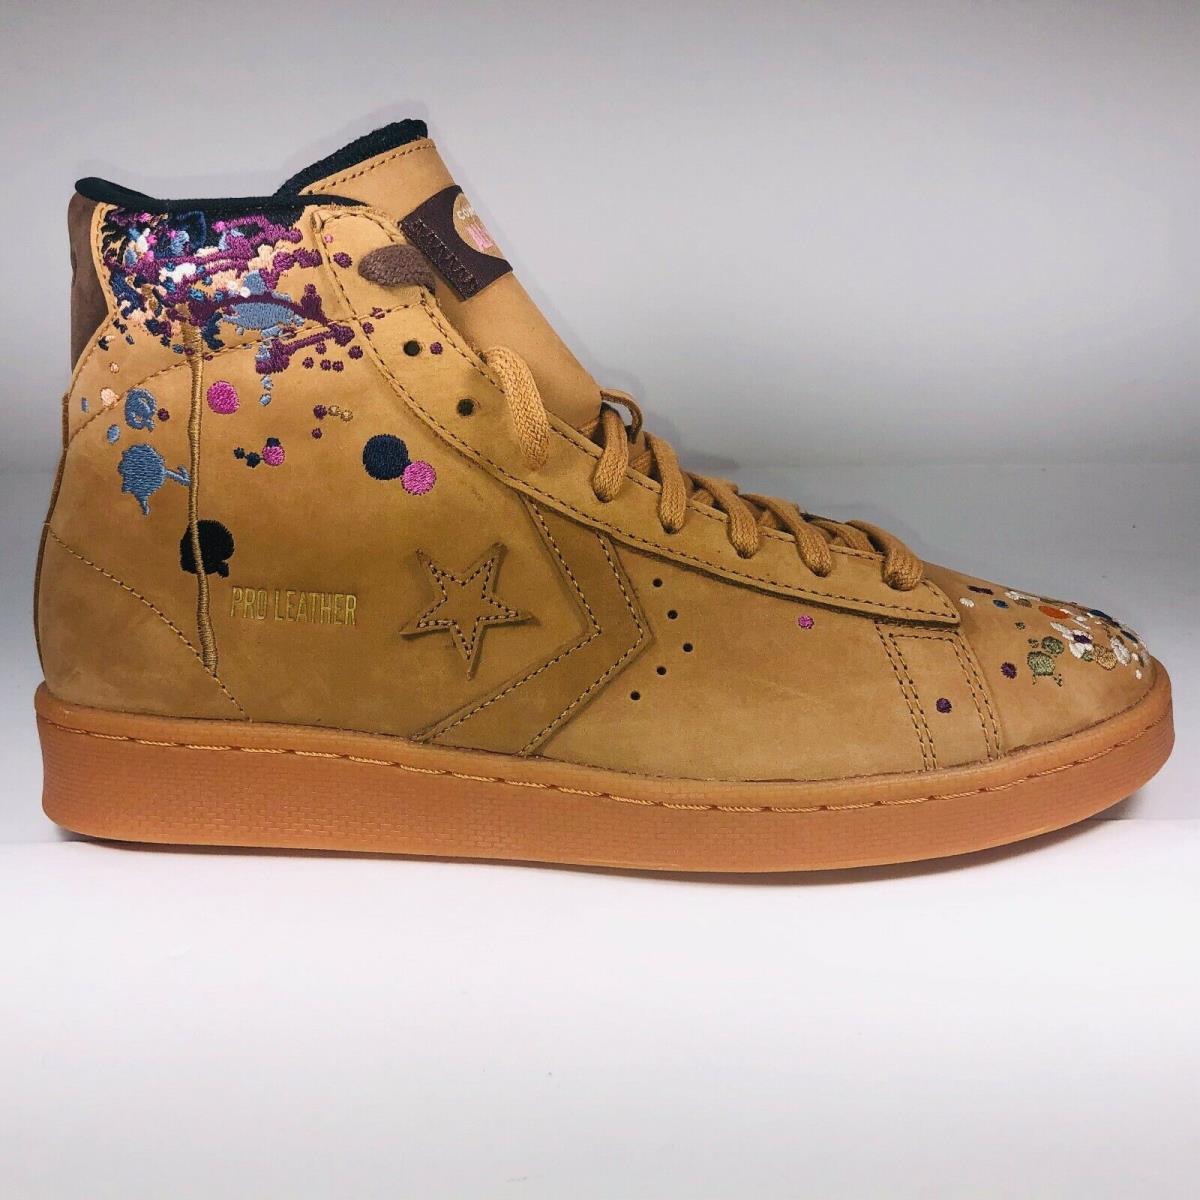 Converse Bandulu Pro Leather Mid Tan Multicolor Fashion Shoe Mens 9.5 169908c